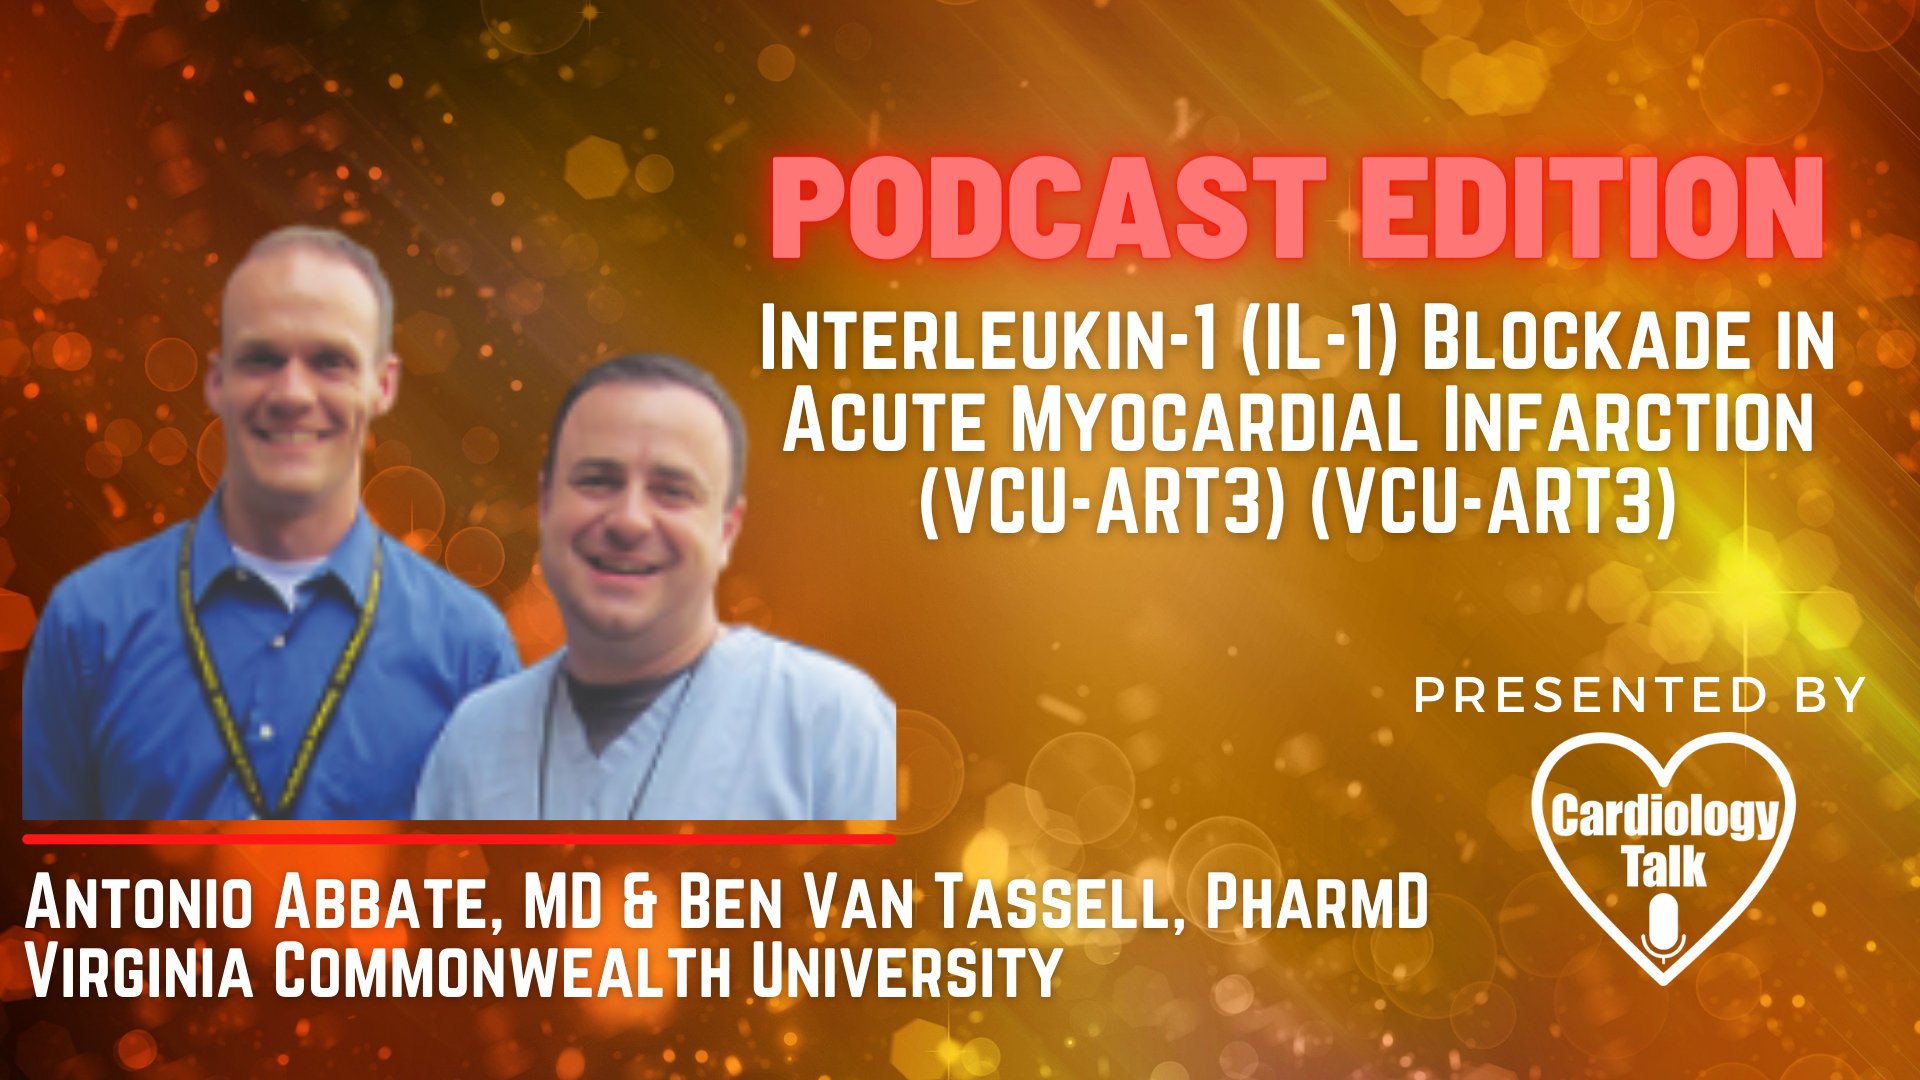 Podcast- Antonio Abbate, MD & Ben Van Tassell, PharmD - Interleukin-1 (IL-1) Blockade in Acute Myocardial Infarction (VCU-ART3) (VCU-ART3)